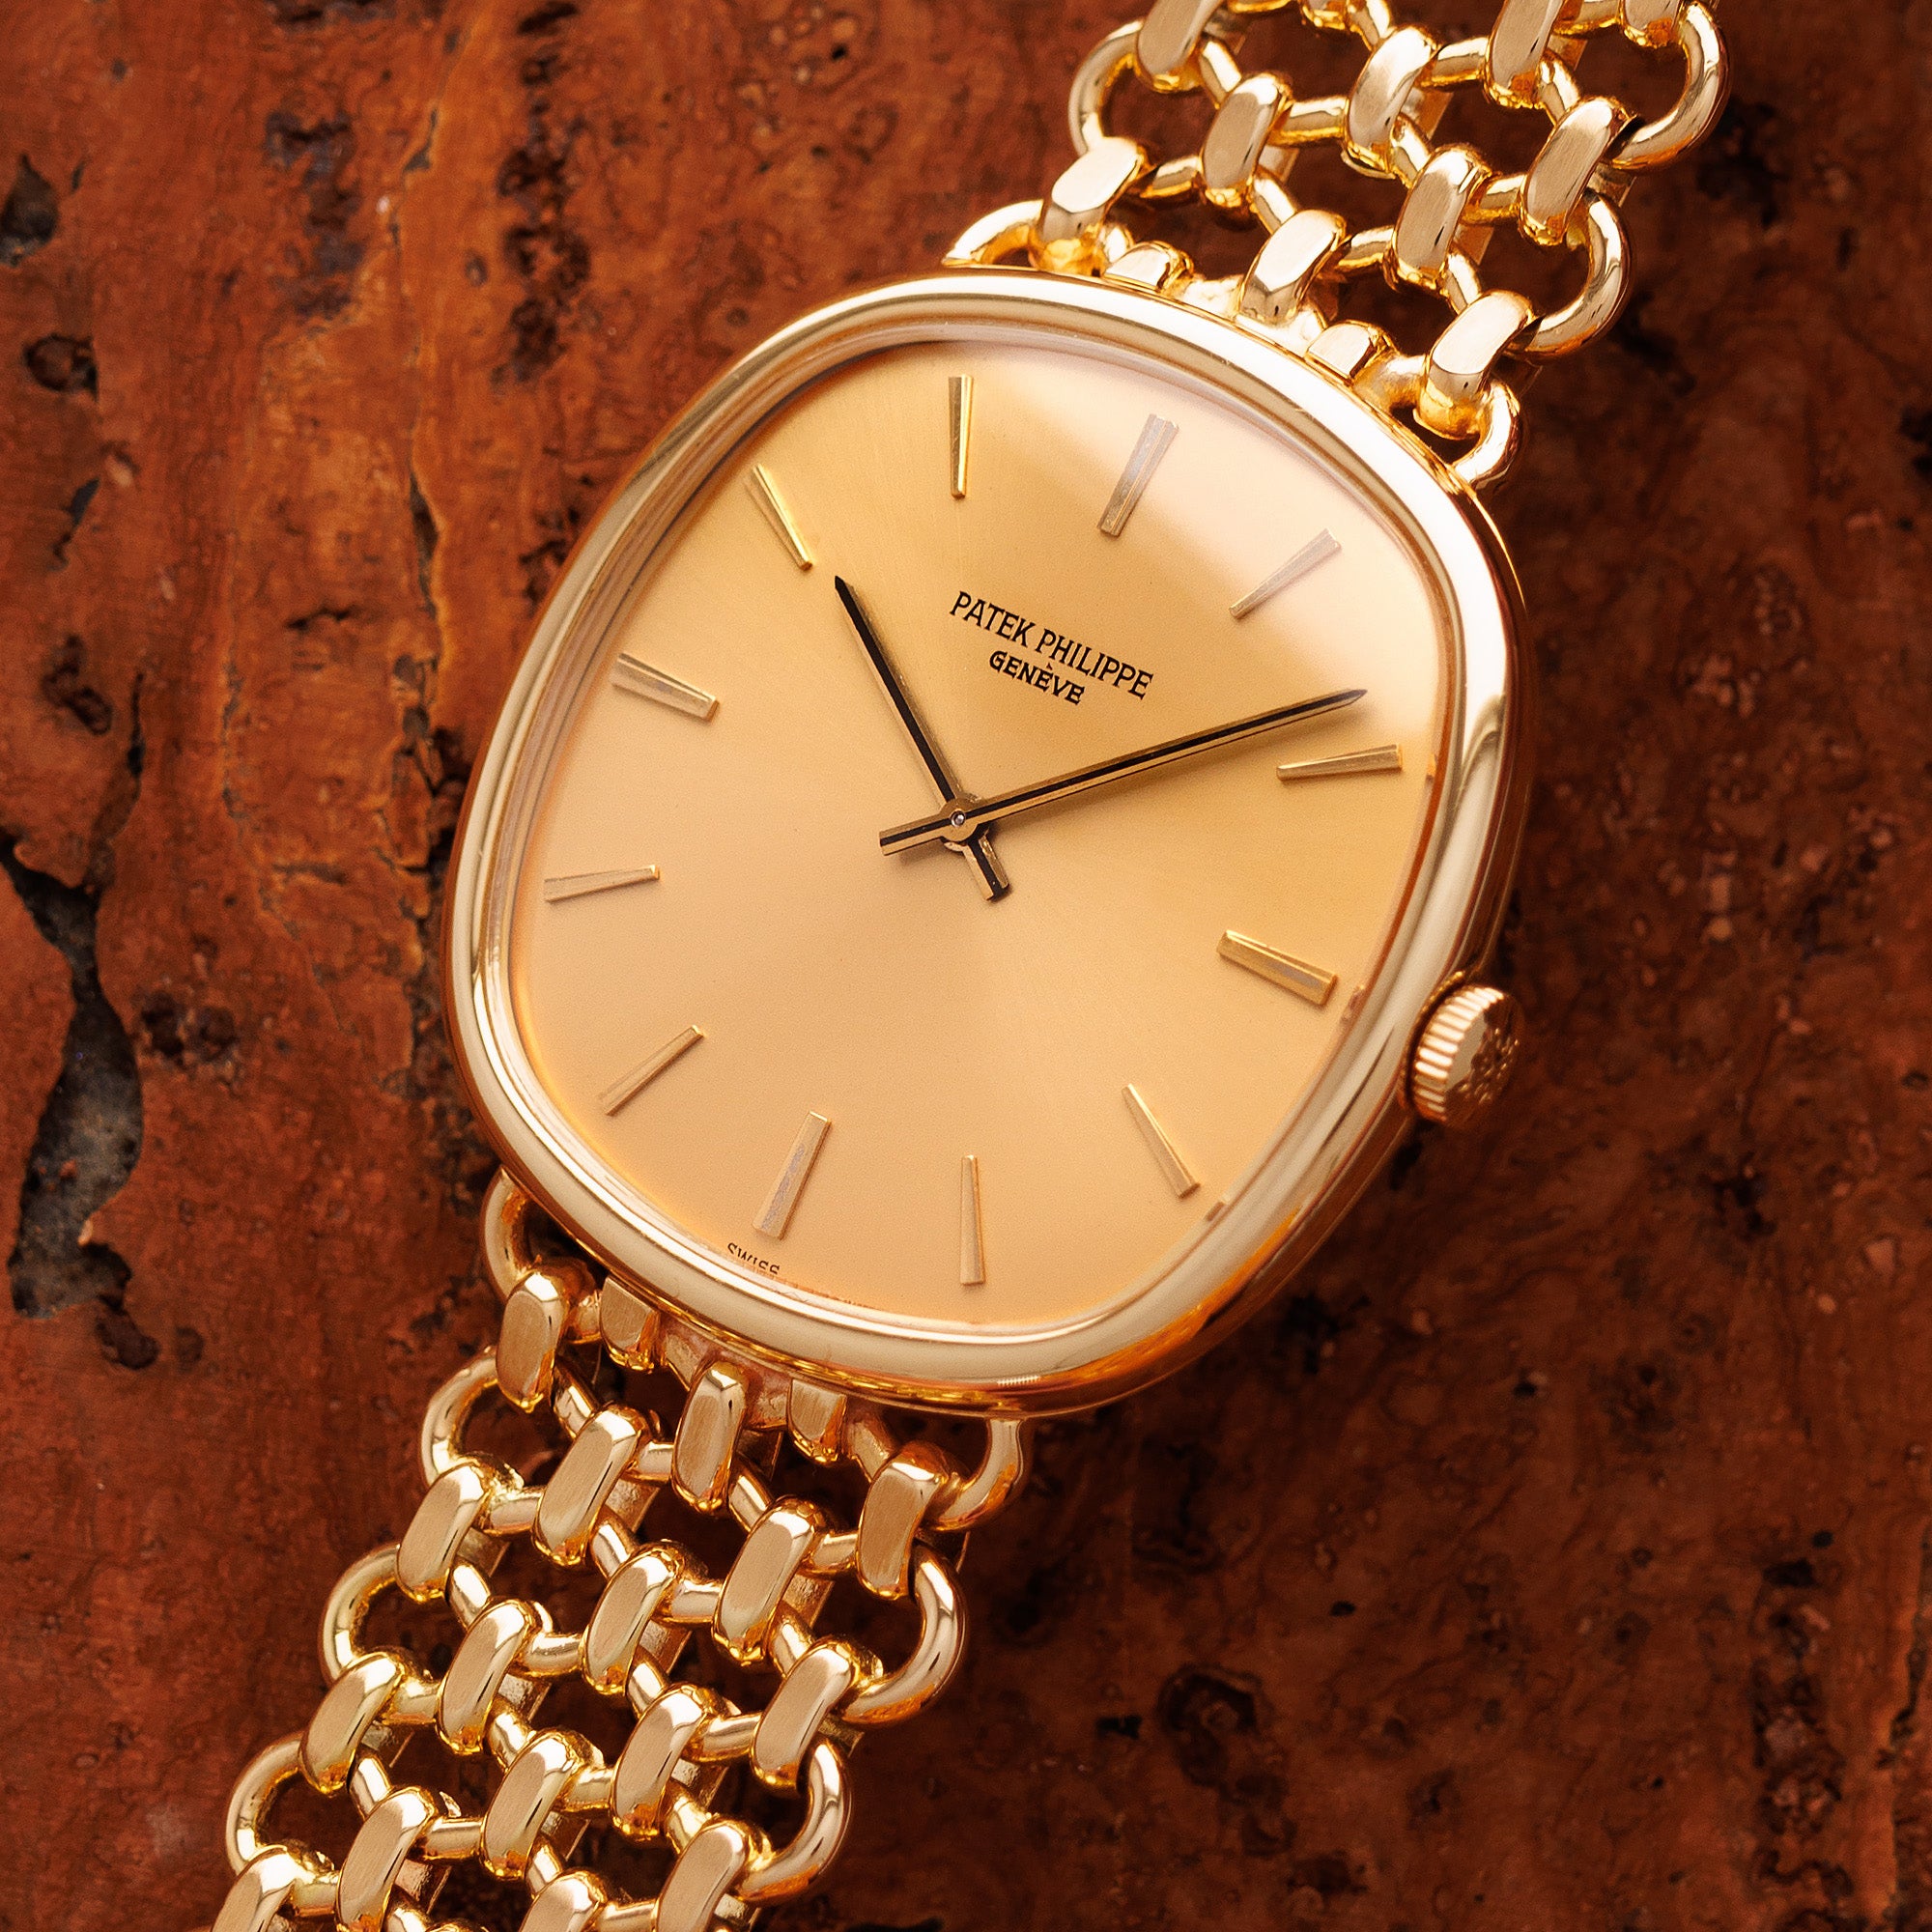 Patek Philippe - Patek Philippe Yellow Gold Circle Watch Ref. 3844 - The Keystone Watches